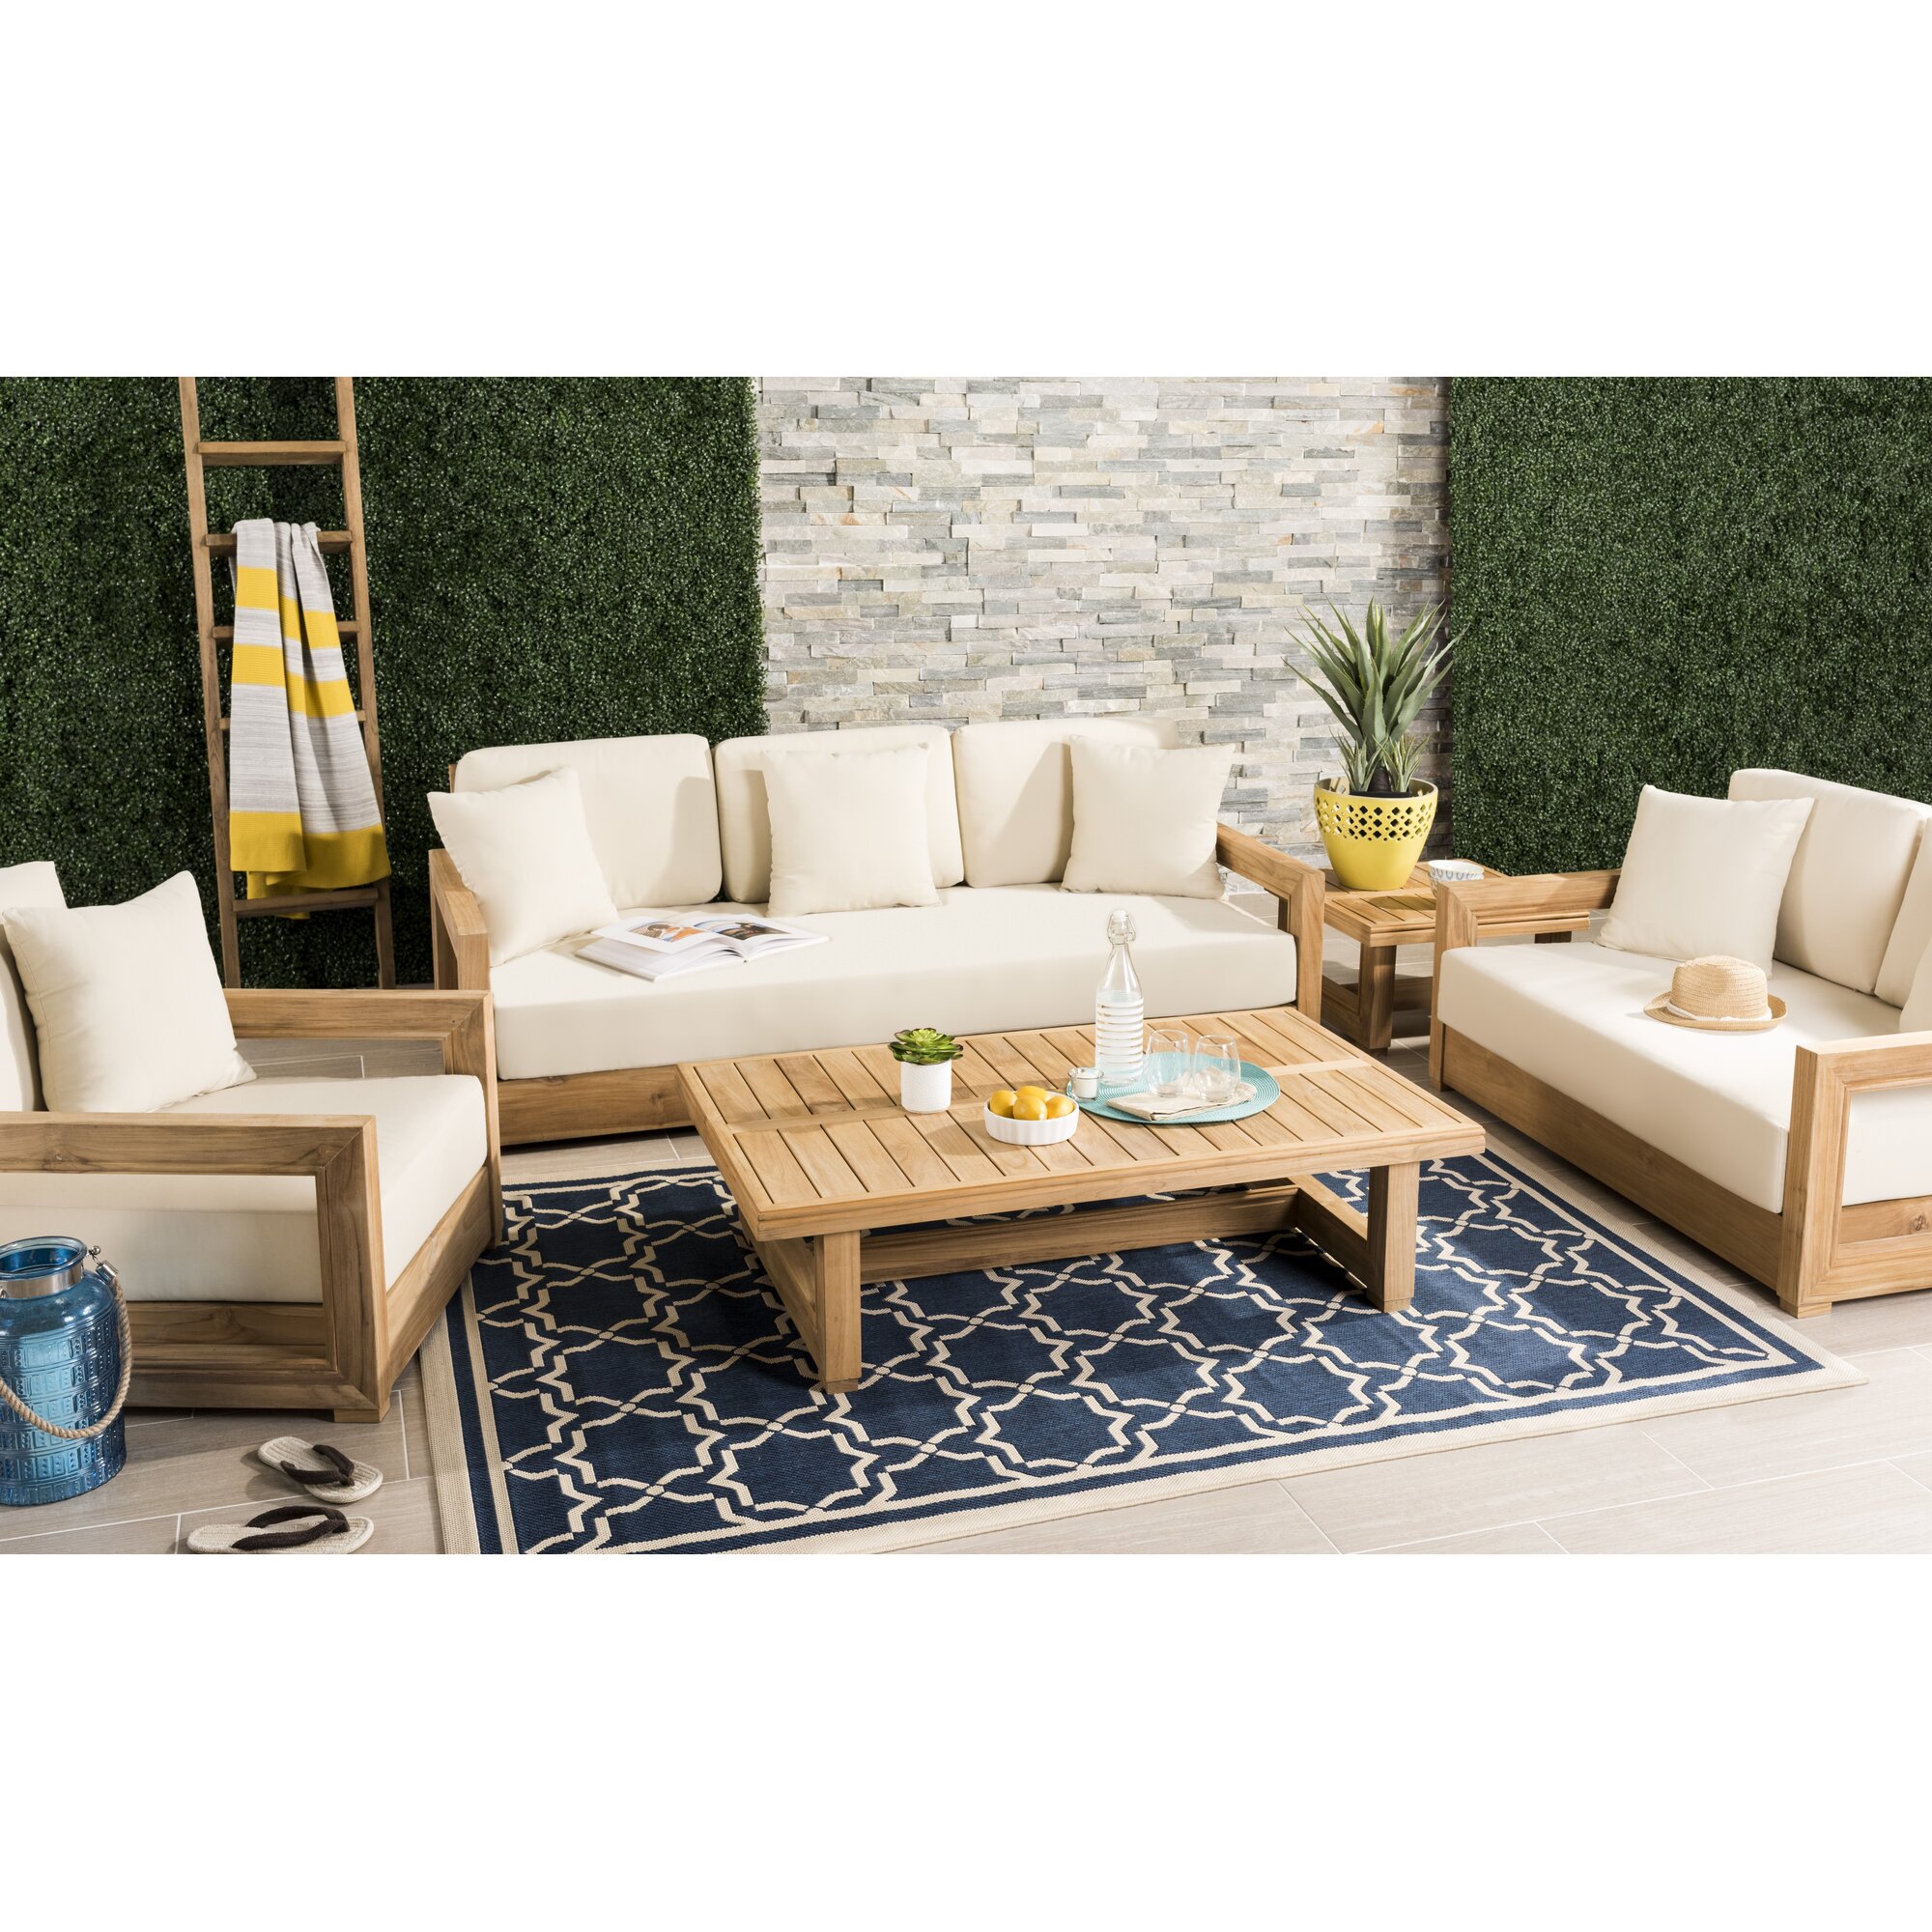 Lakeland 5 Piece Teak Sofa Seating Group with Cushions